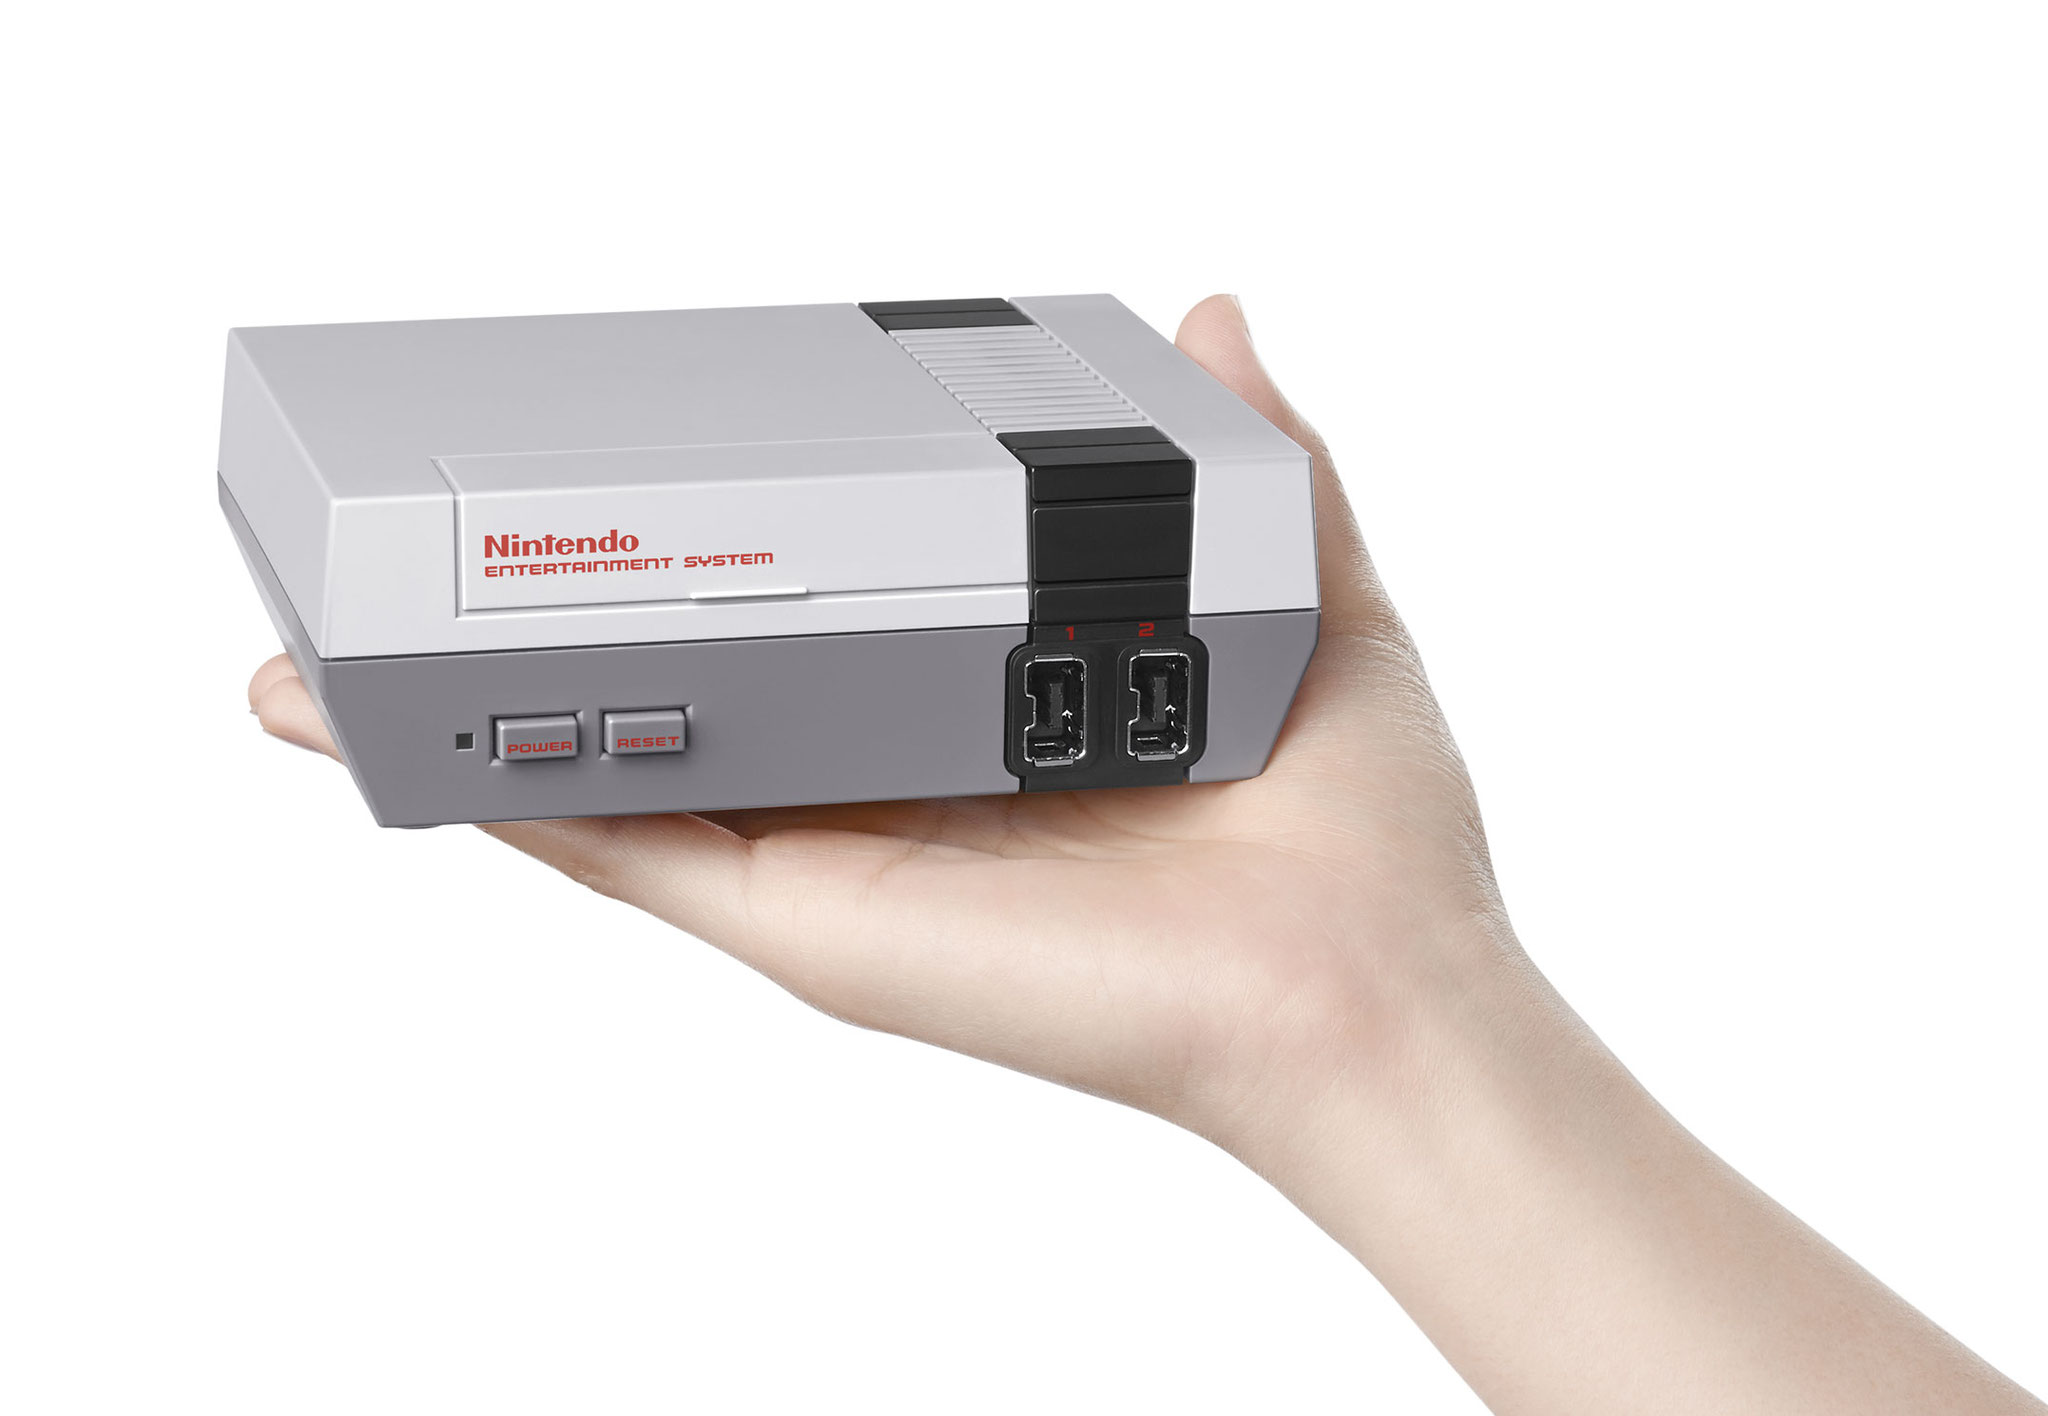 Hat Ende 2016 den Schrumpf-Trend losgetreten: das "NES Classic Mini".